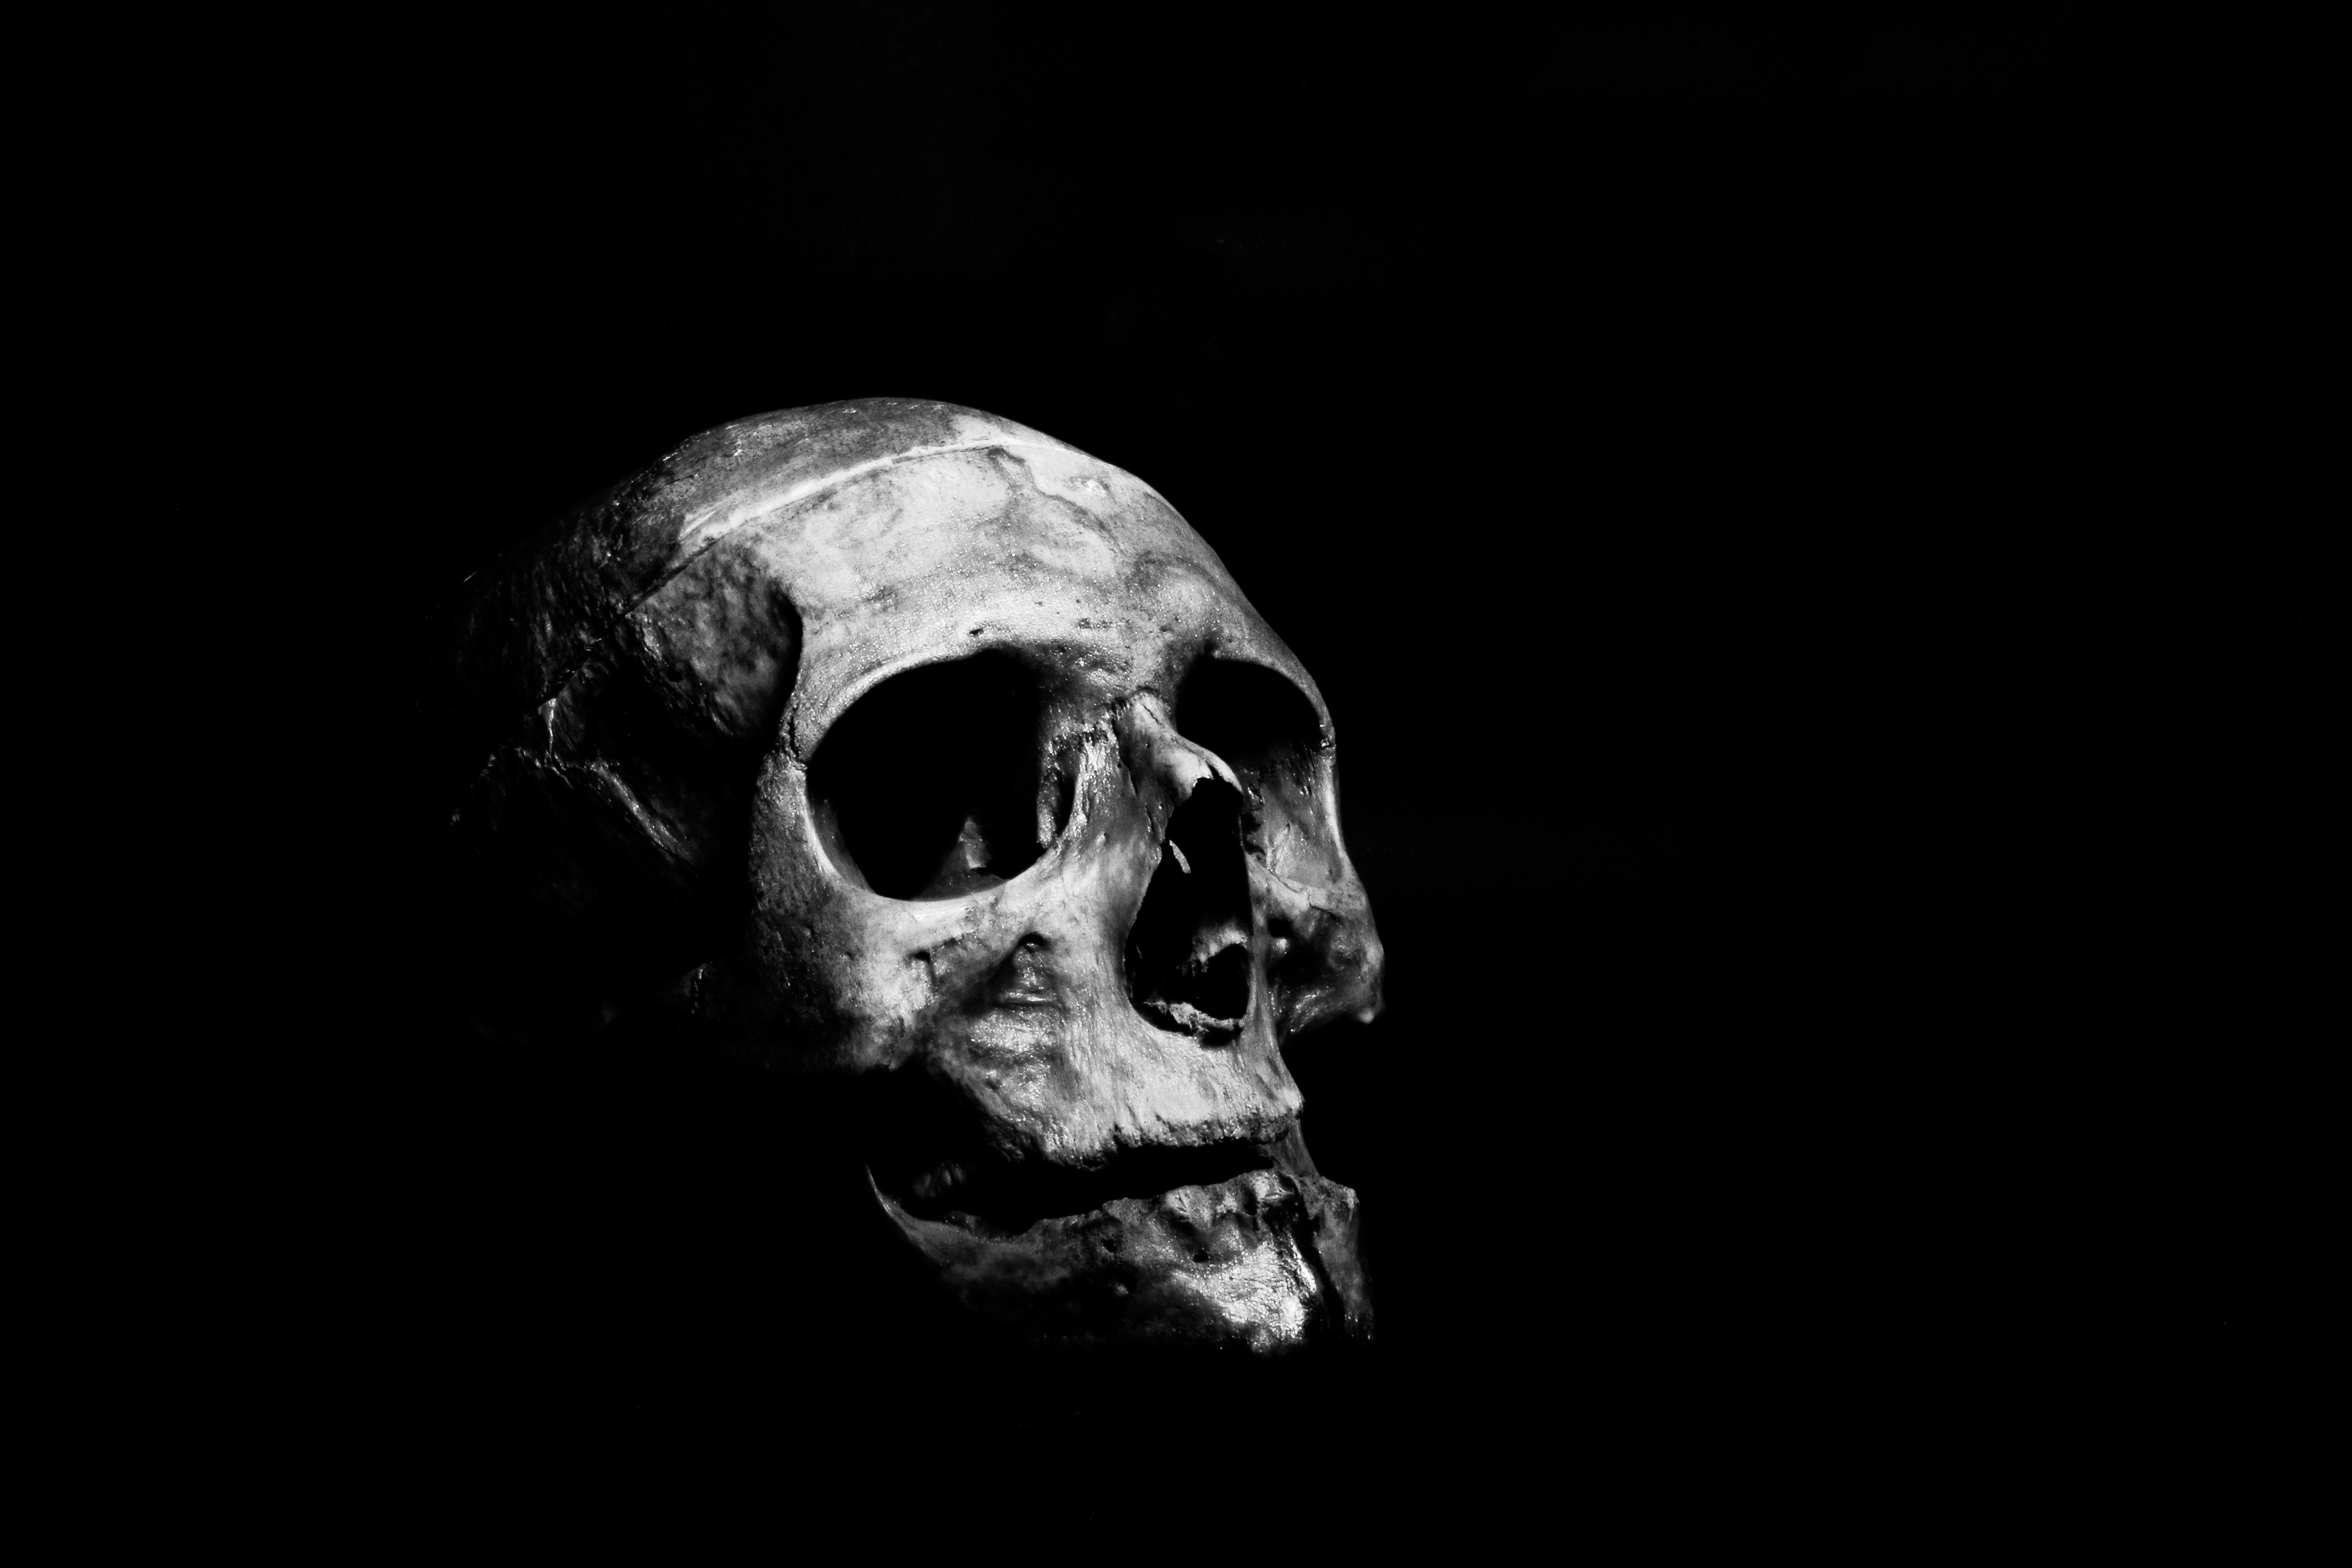 human skull in black - proud of death